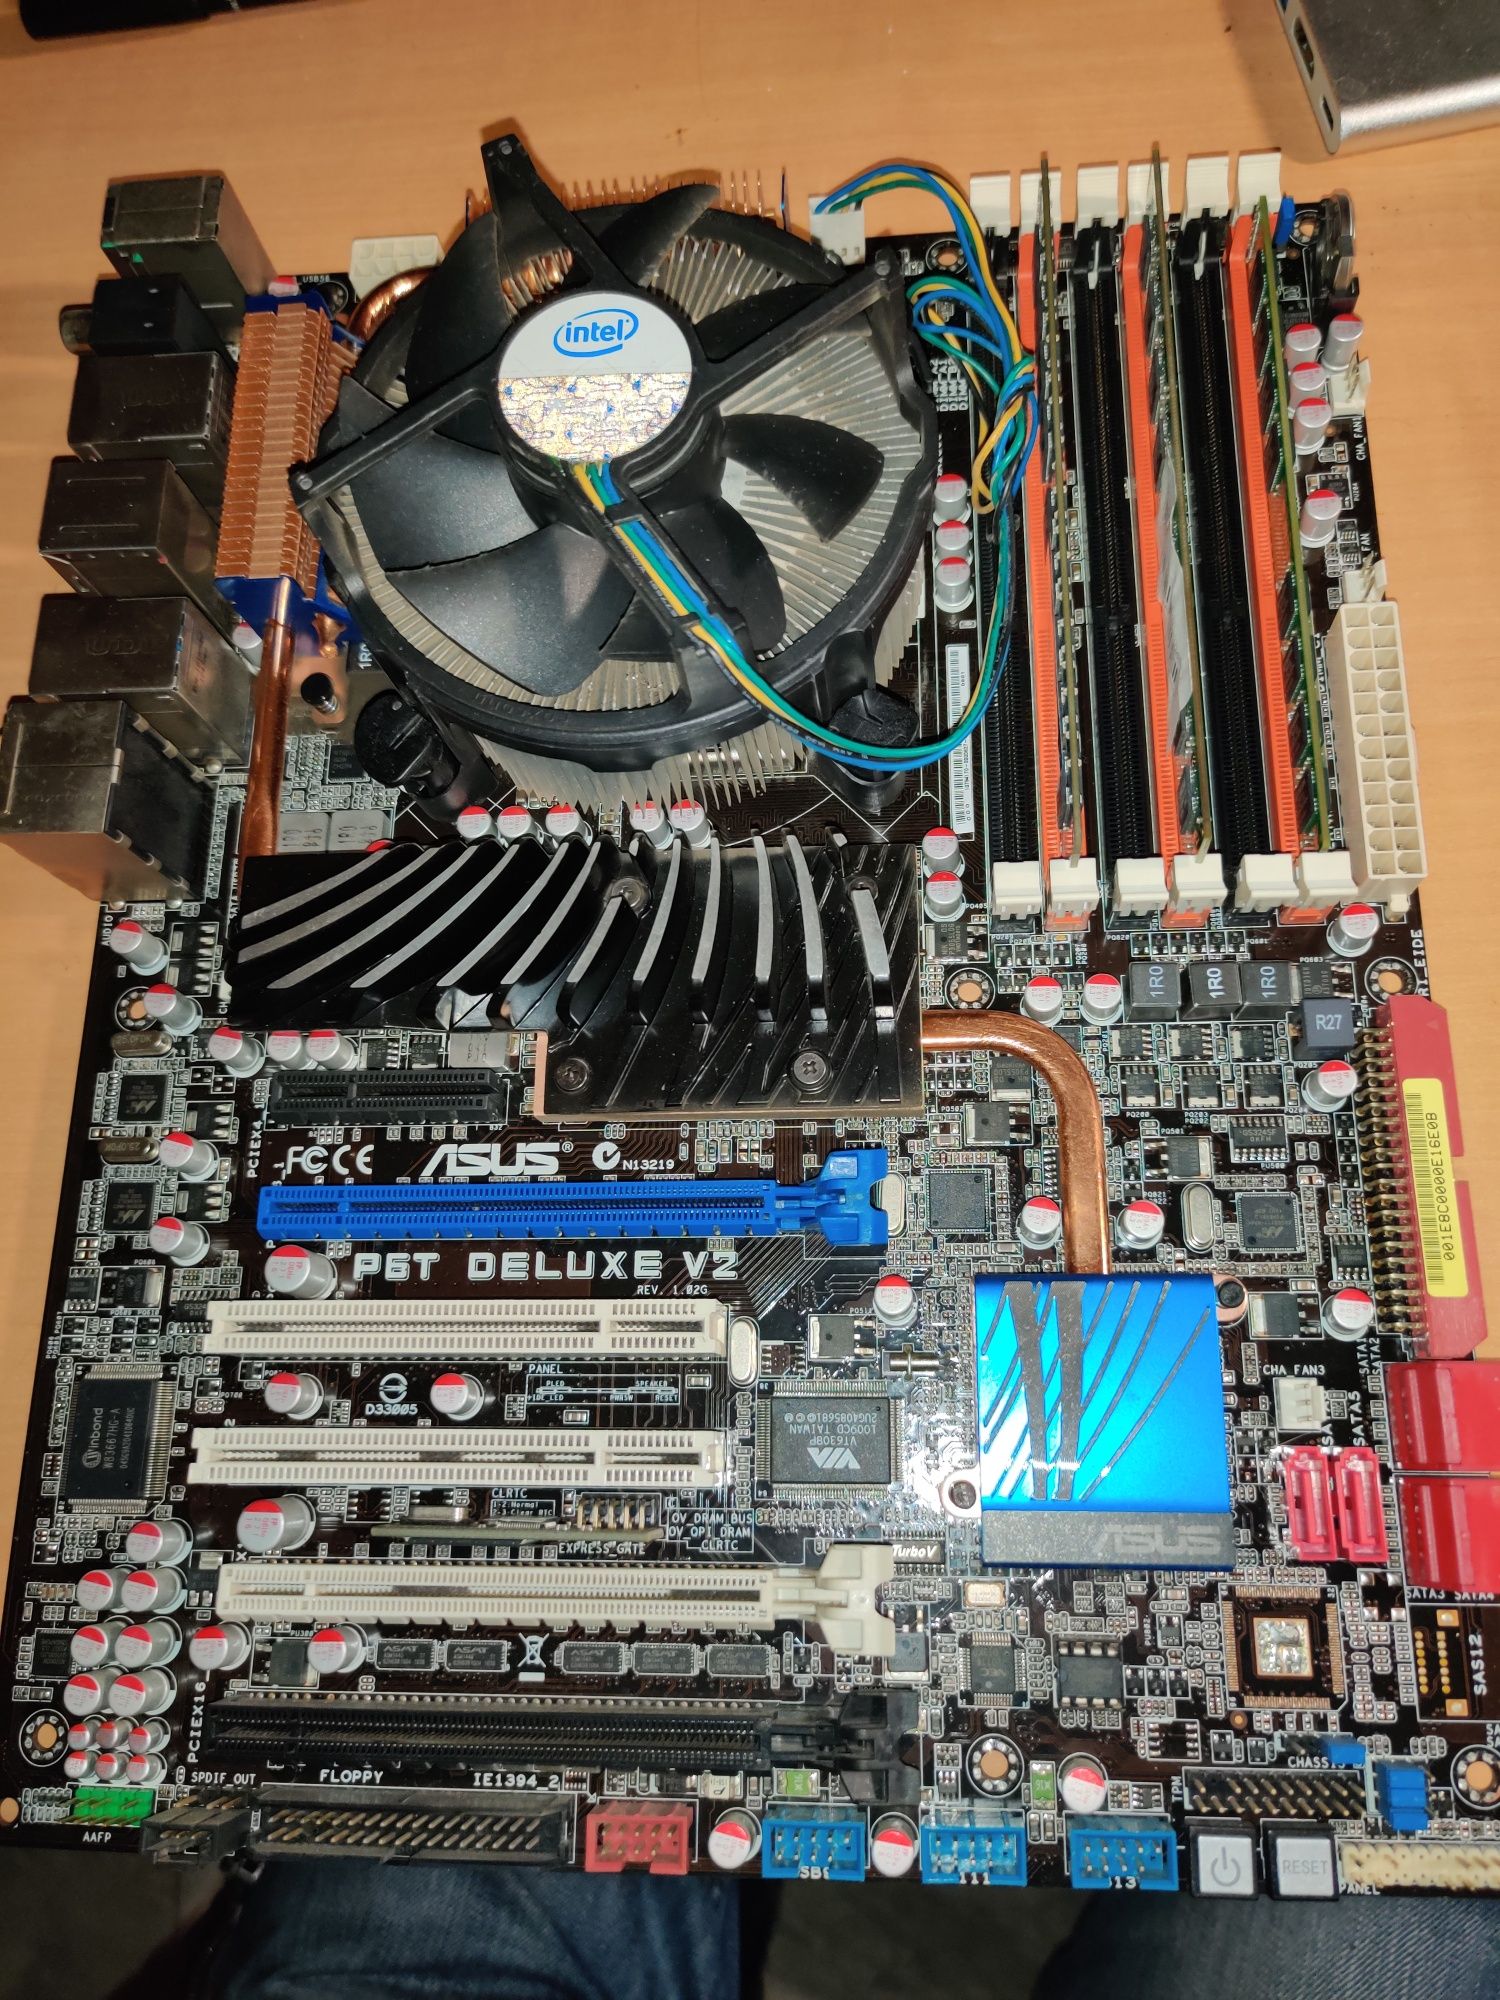 Bundle LGA 1366 / i7-970 + Asus P6T DELUXE V2 / Hexacore